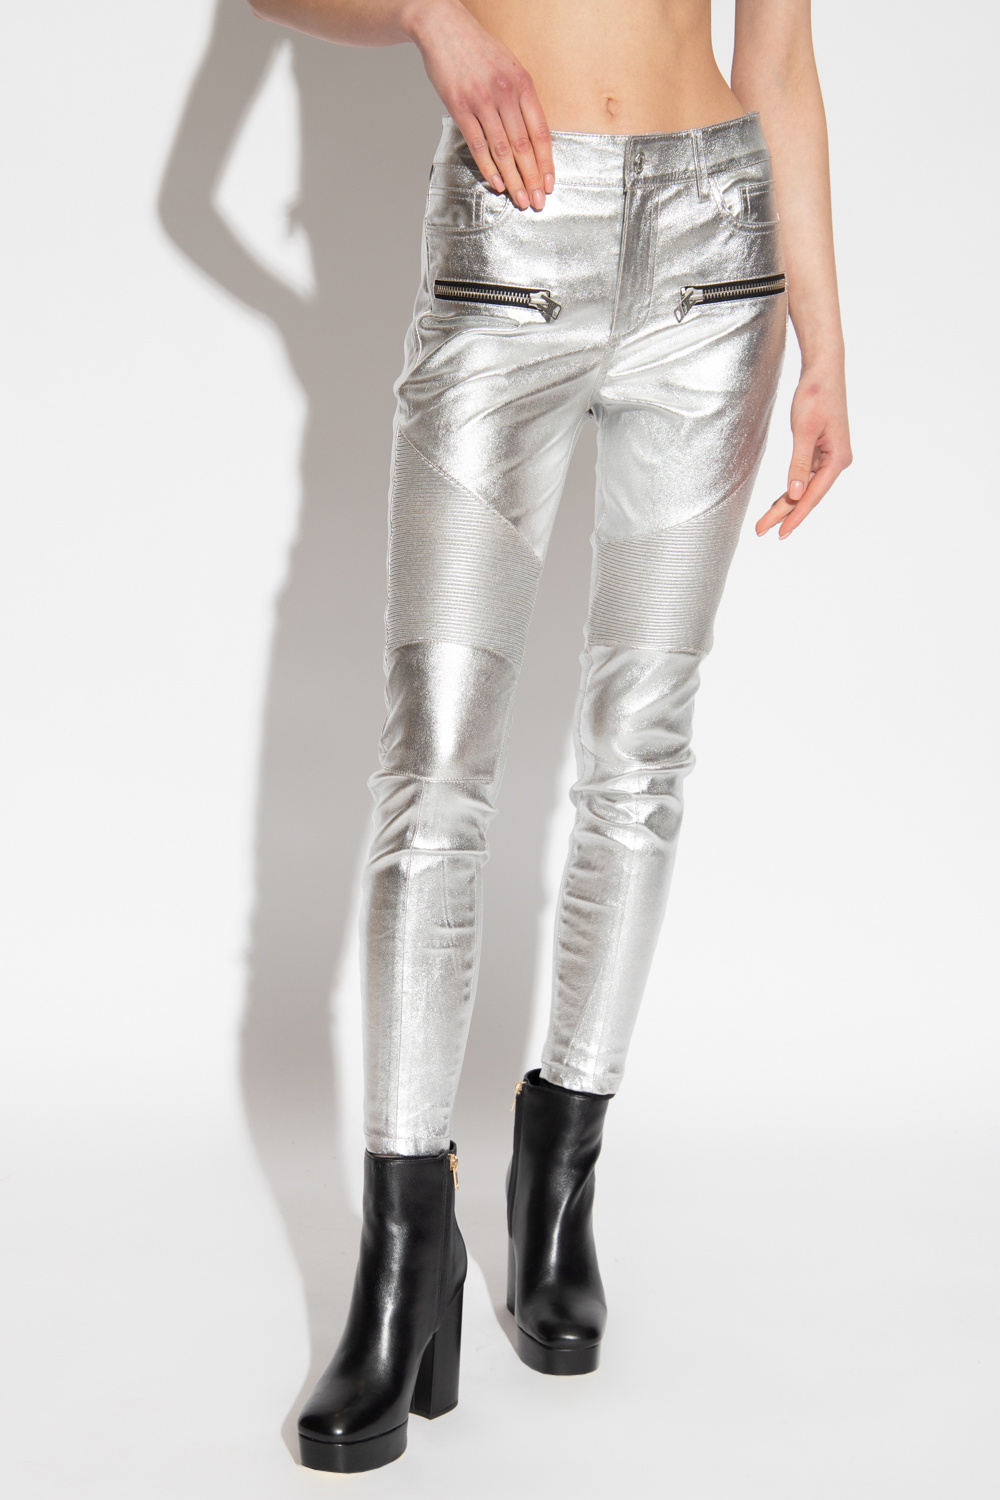 AllSaints ‘Suri’ leather tat trousers